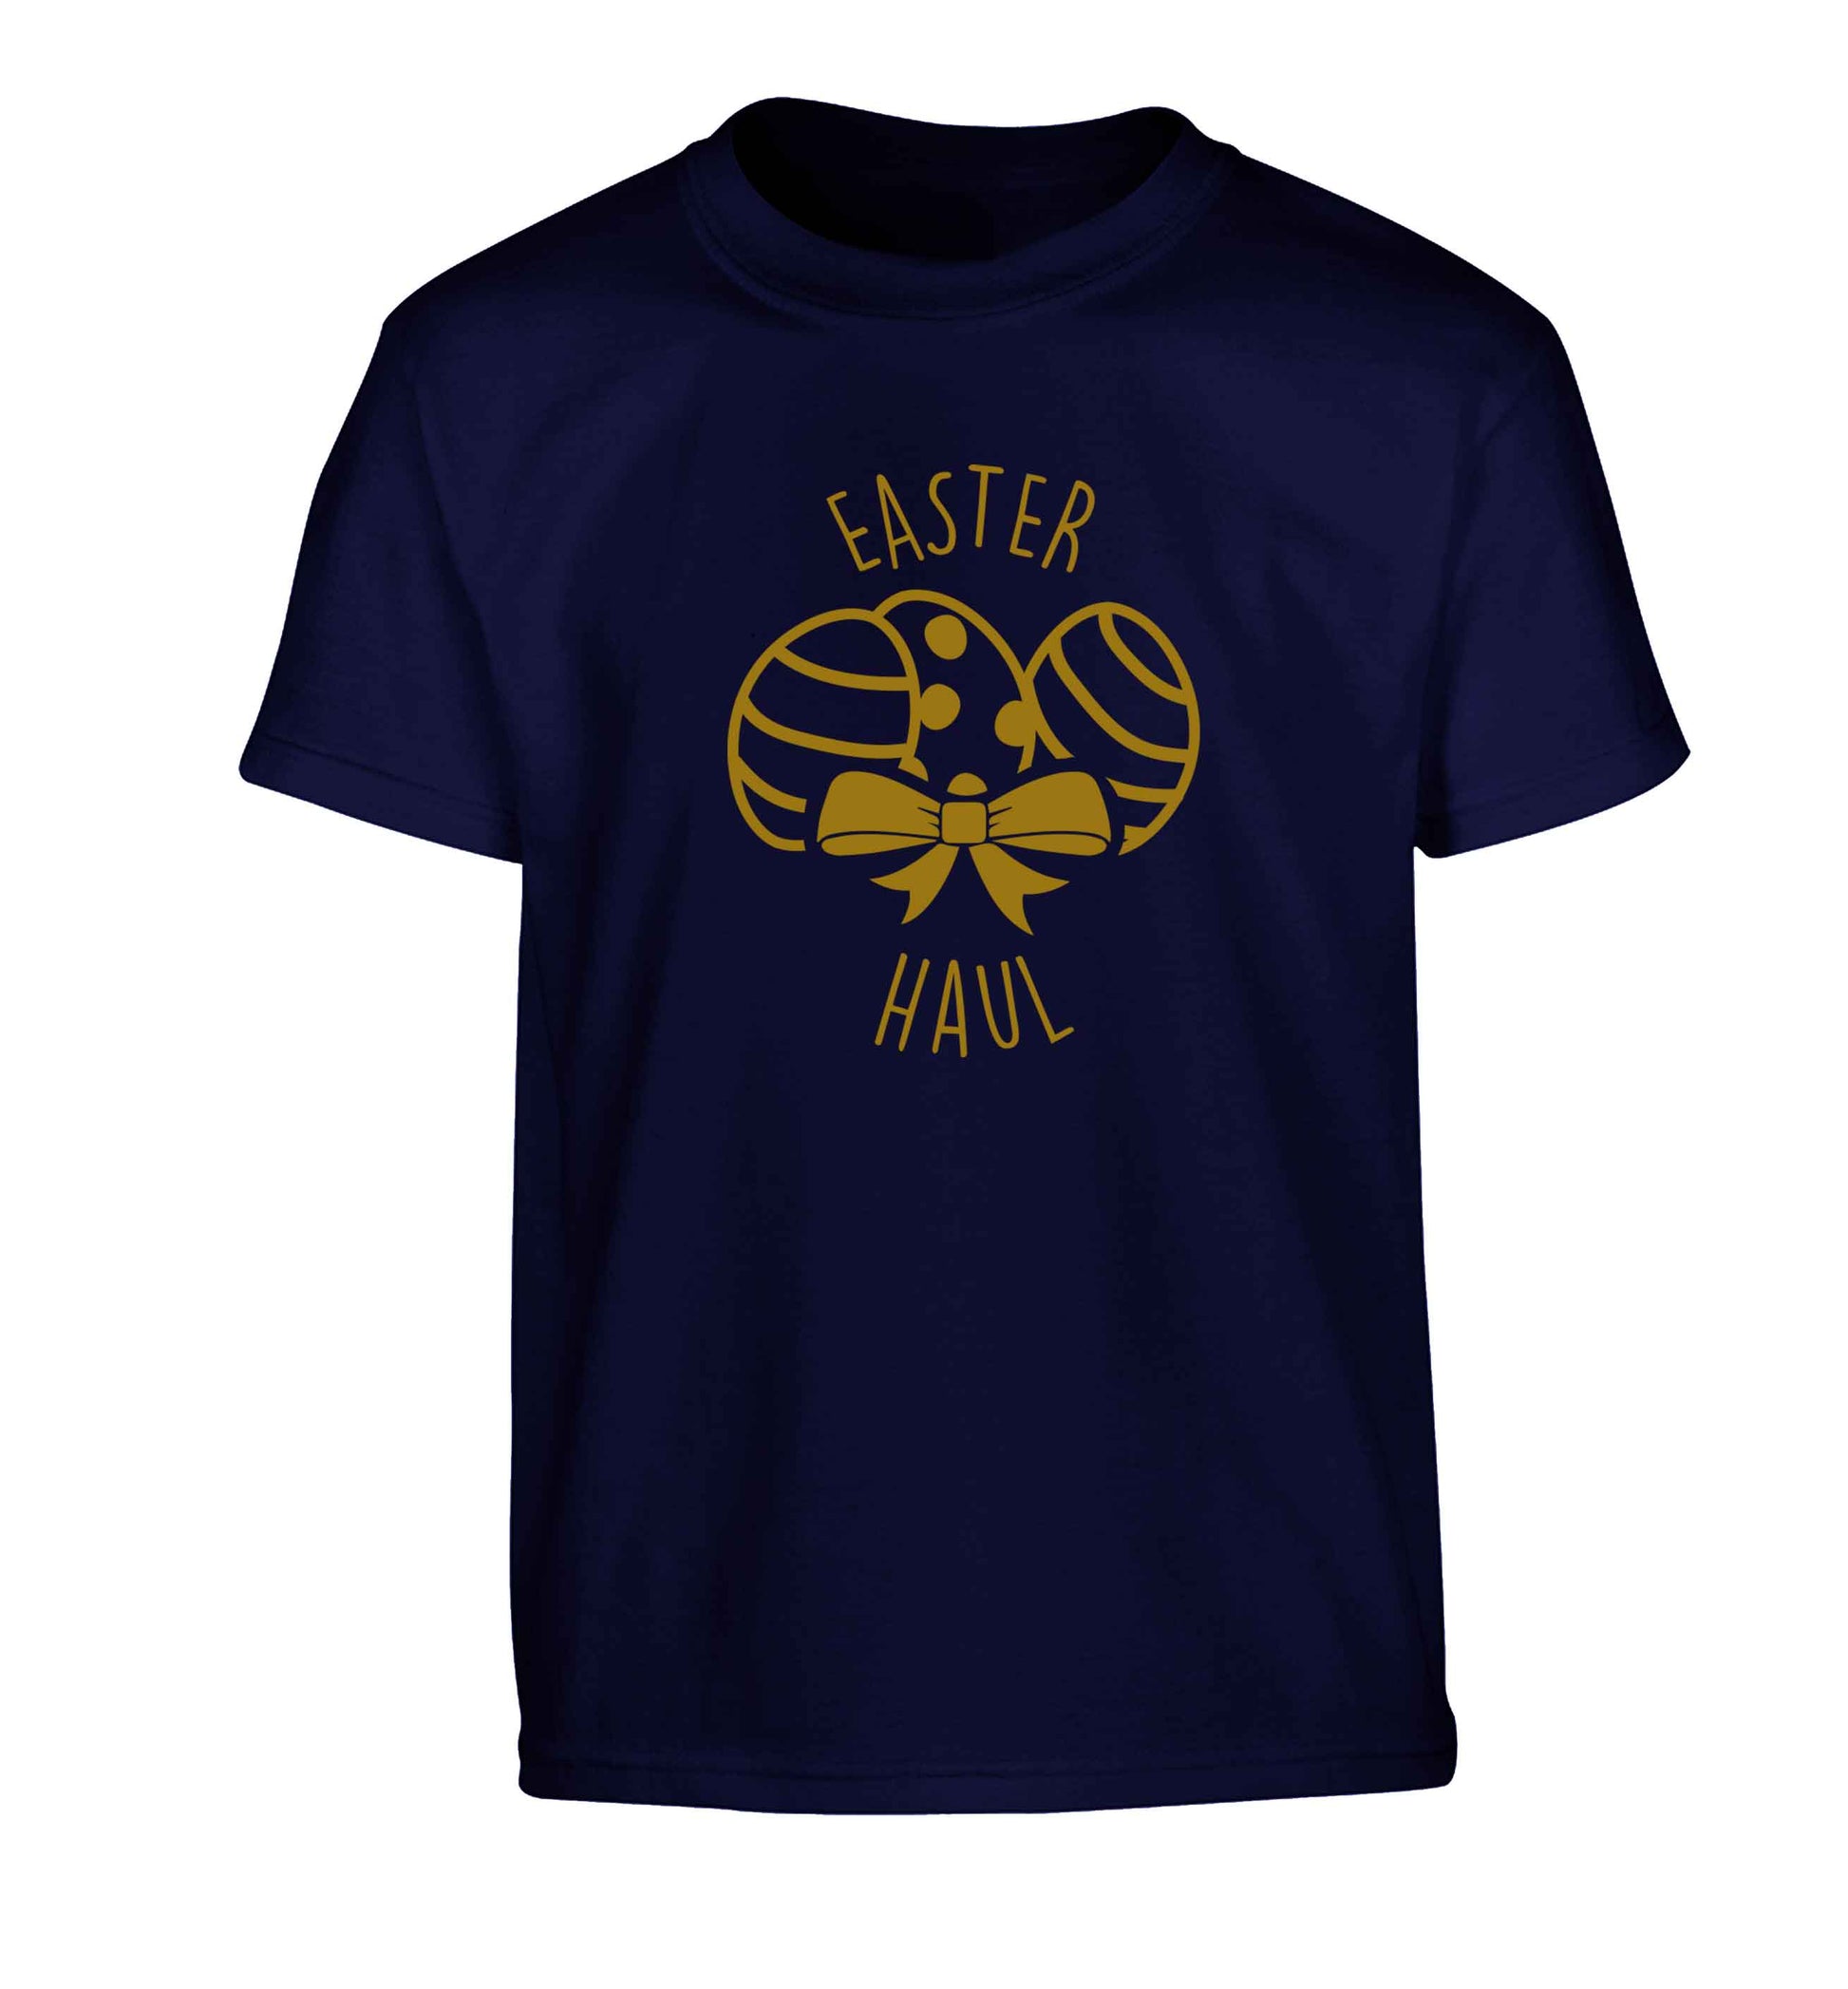 Easter haul Children's navy Tshirt 12-13 Years